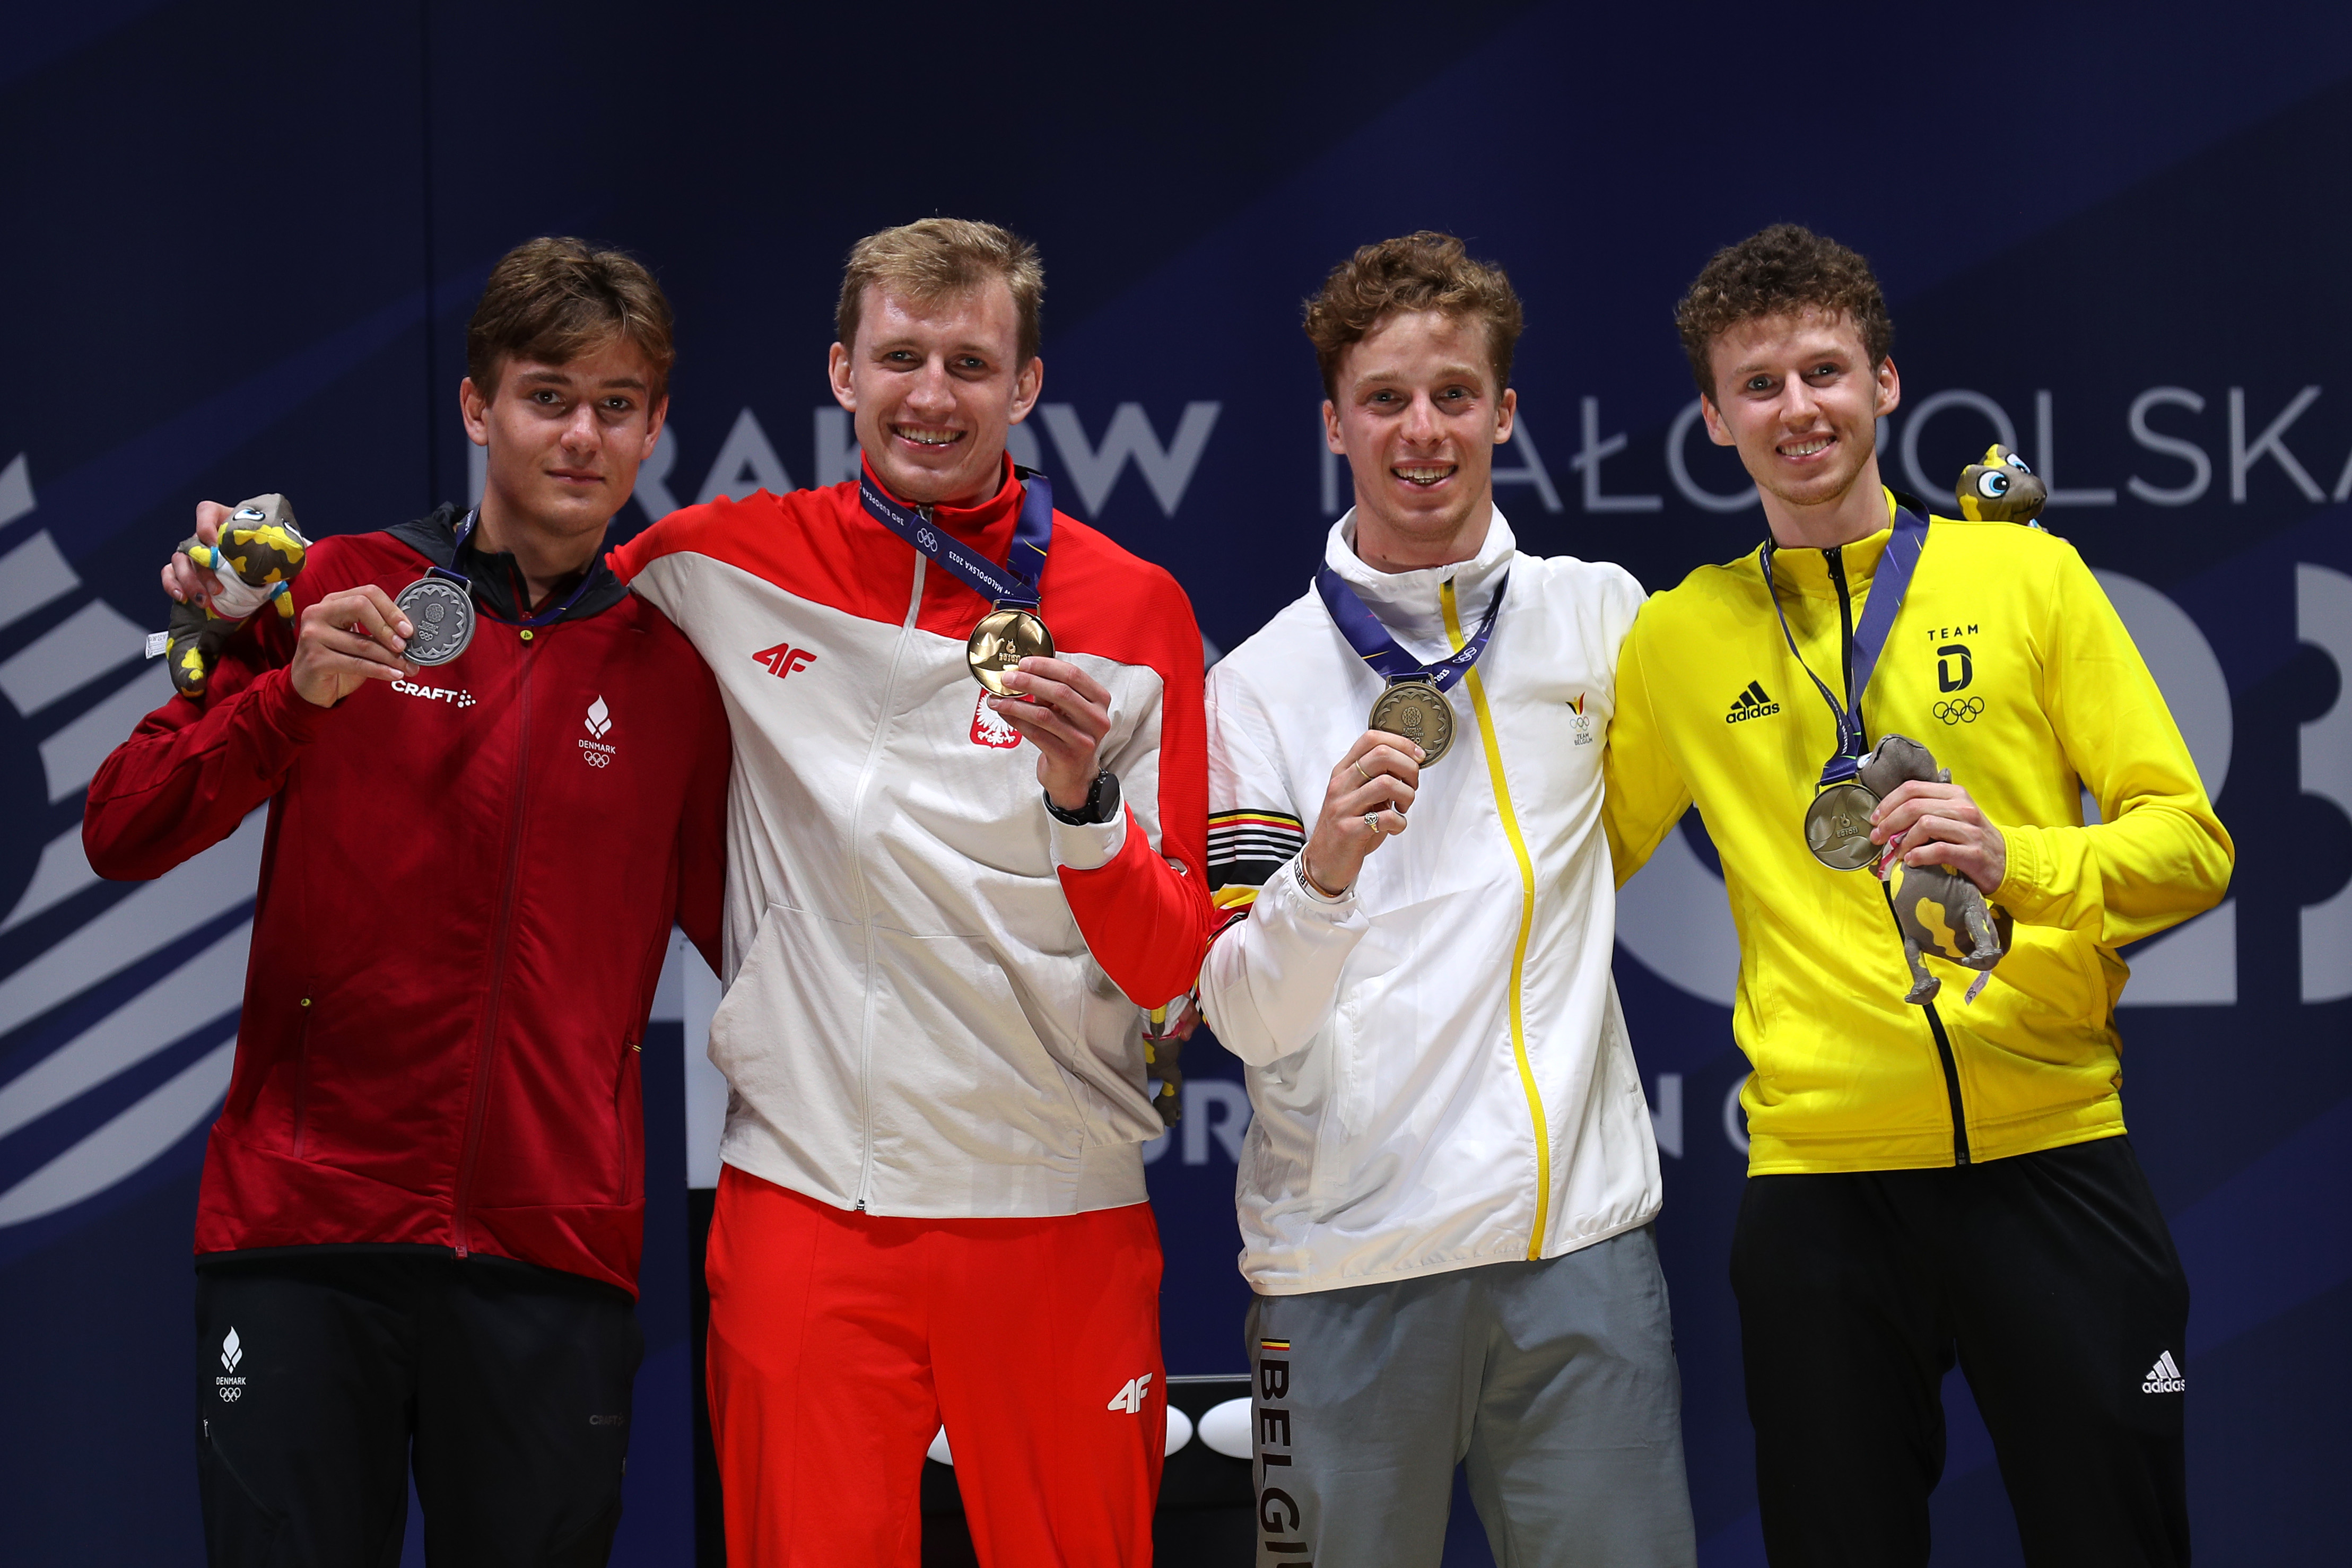 Polish gold in the men’s foil event